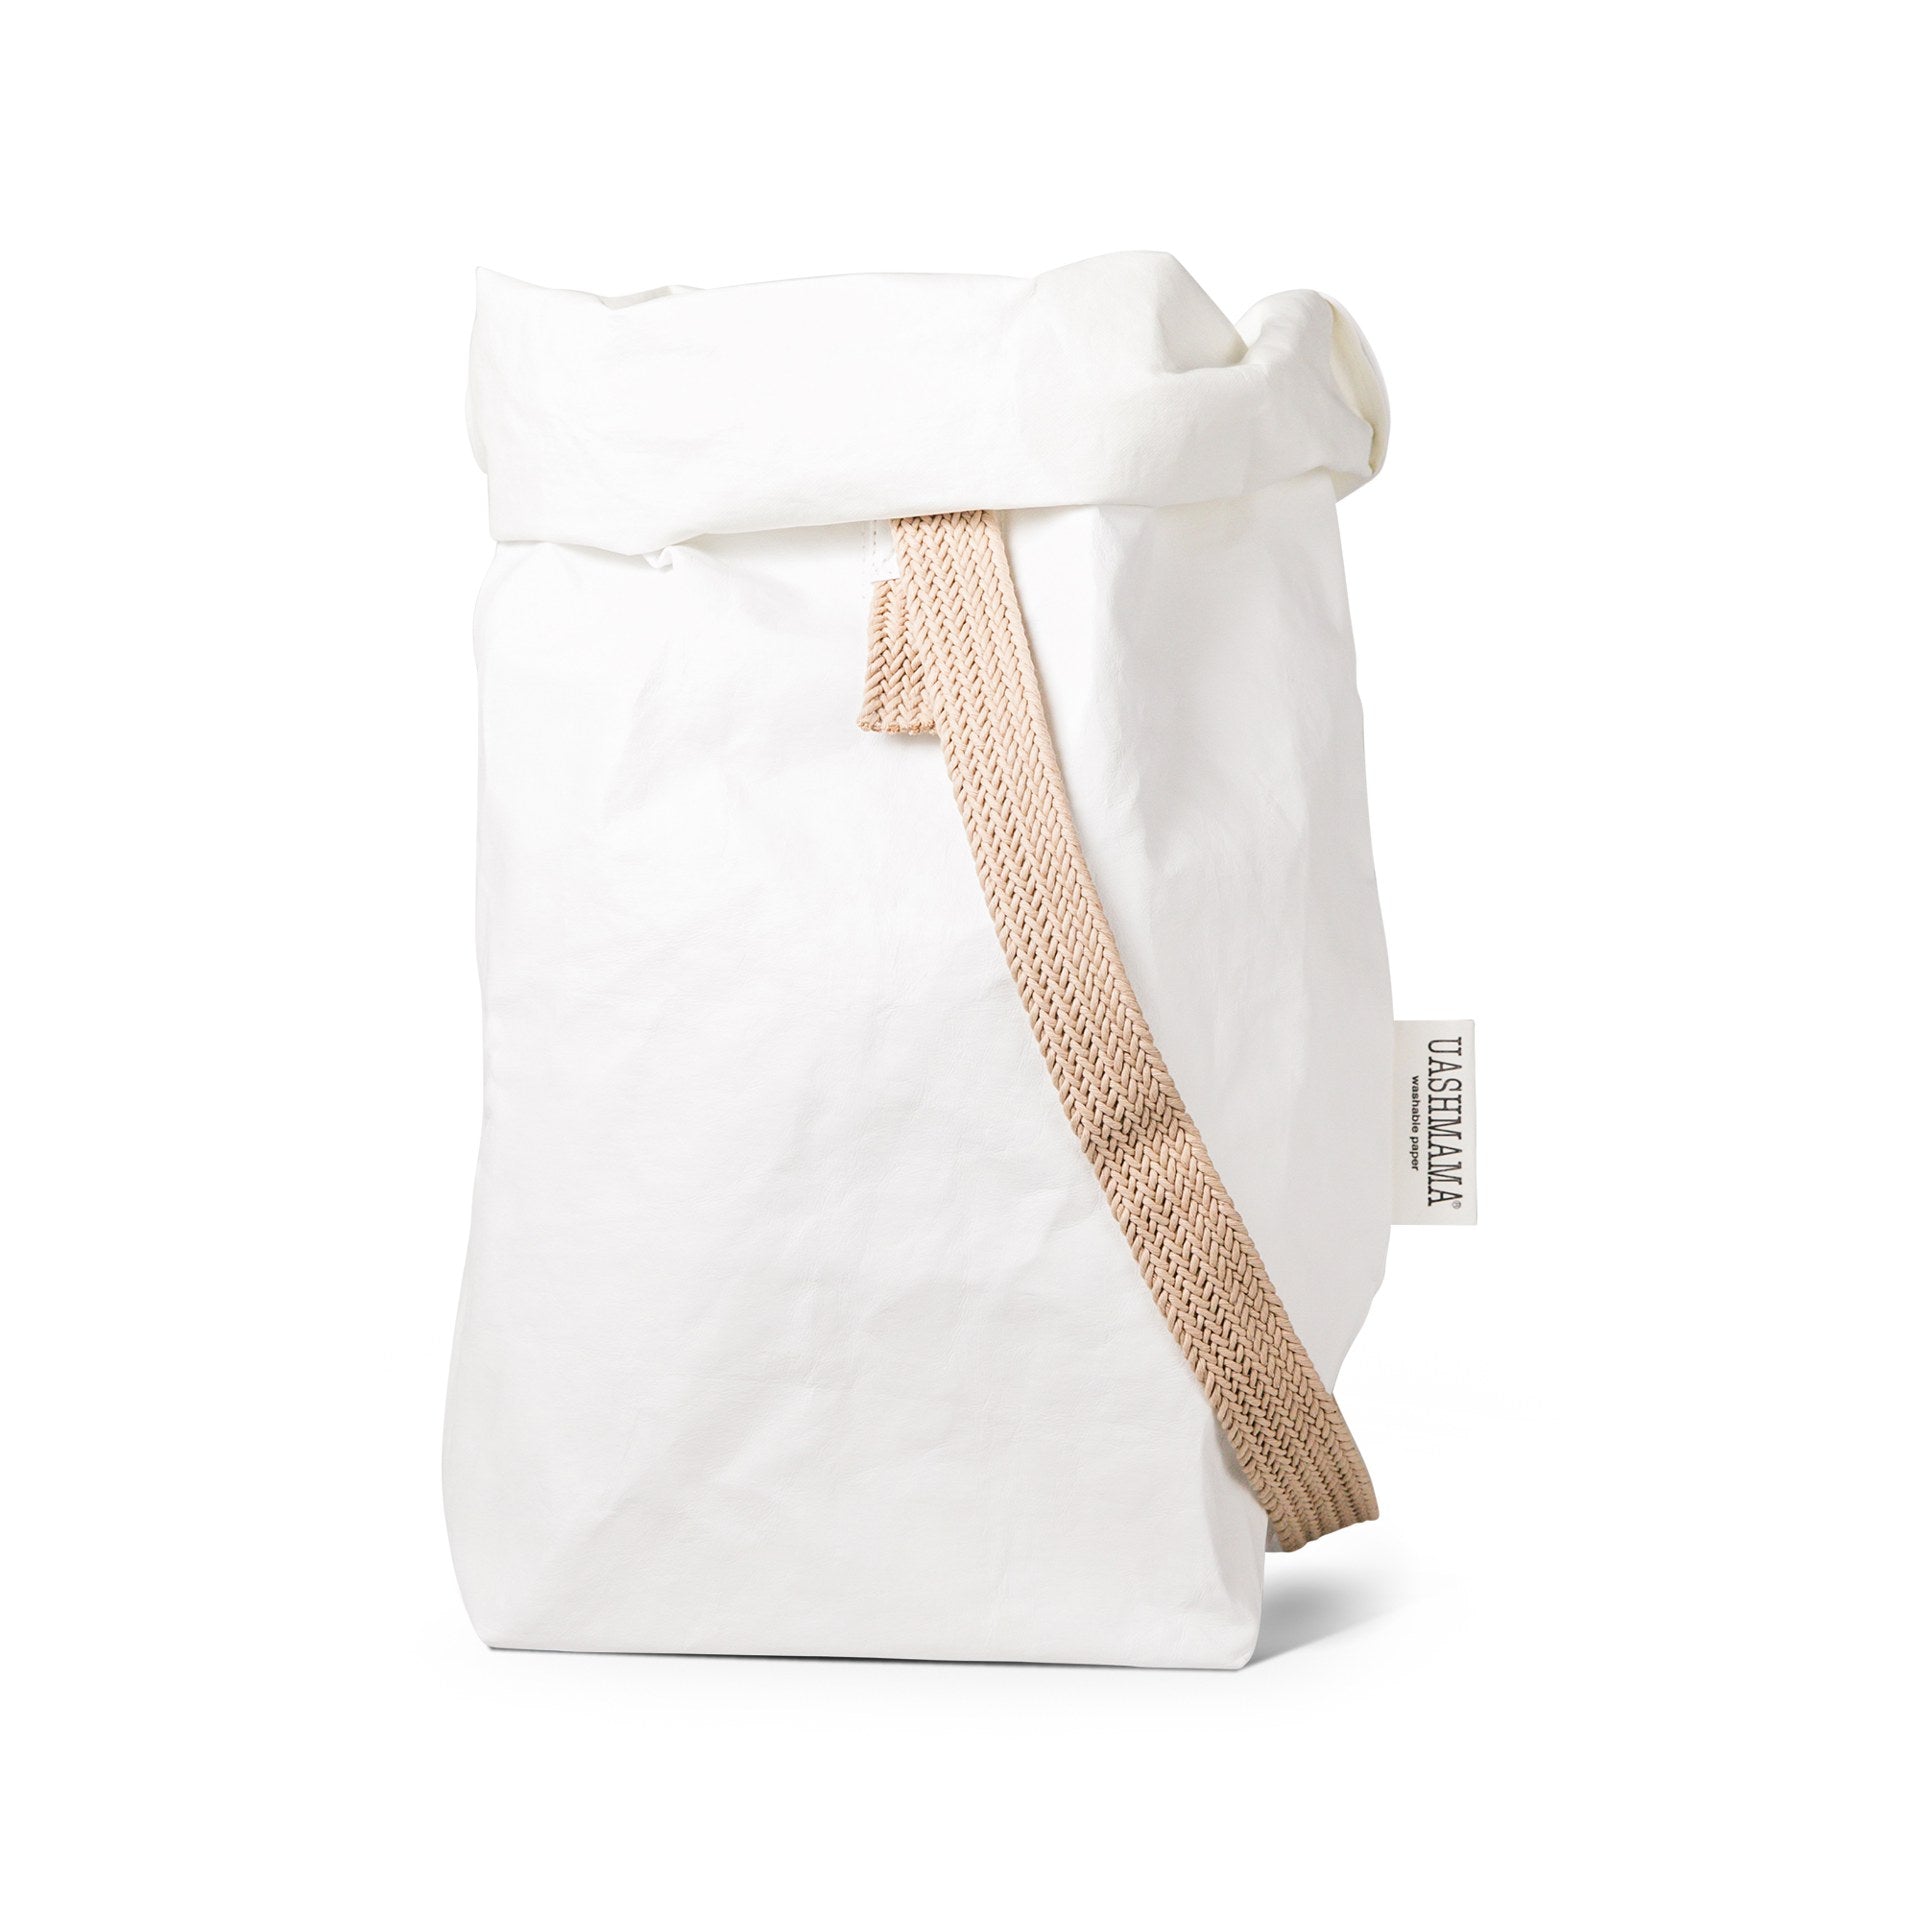 Uashmama Laundry Bag, Drawstring Top/Handles